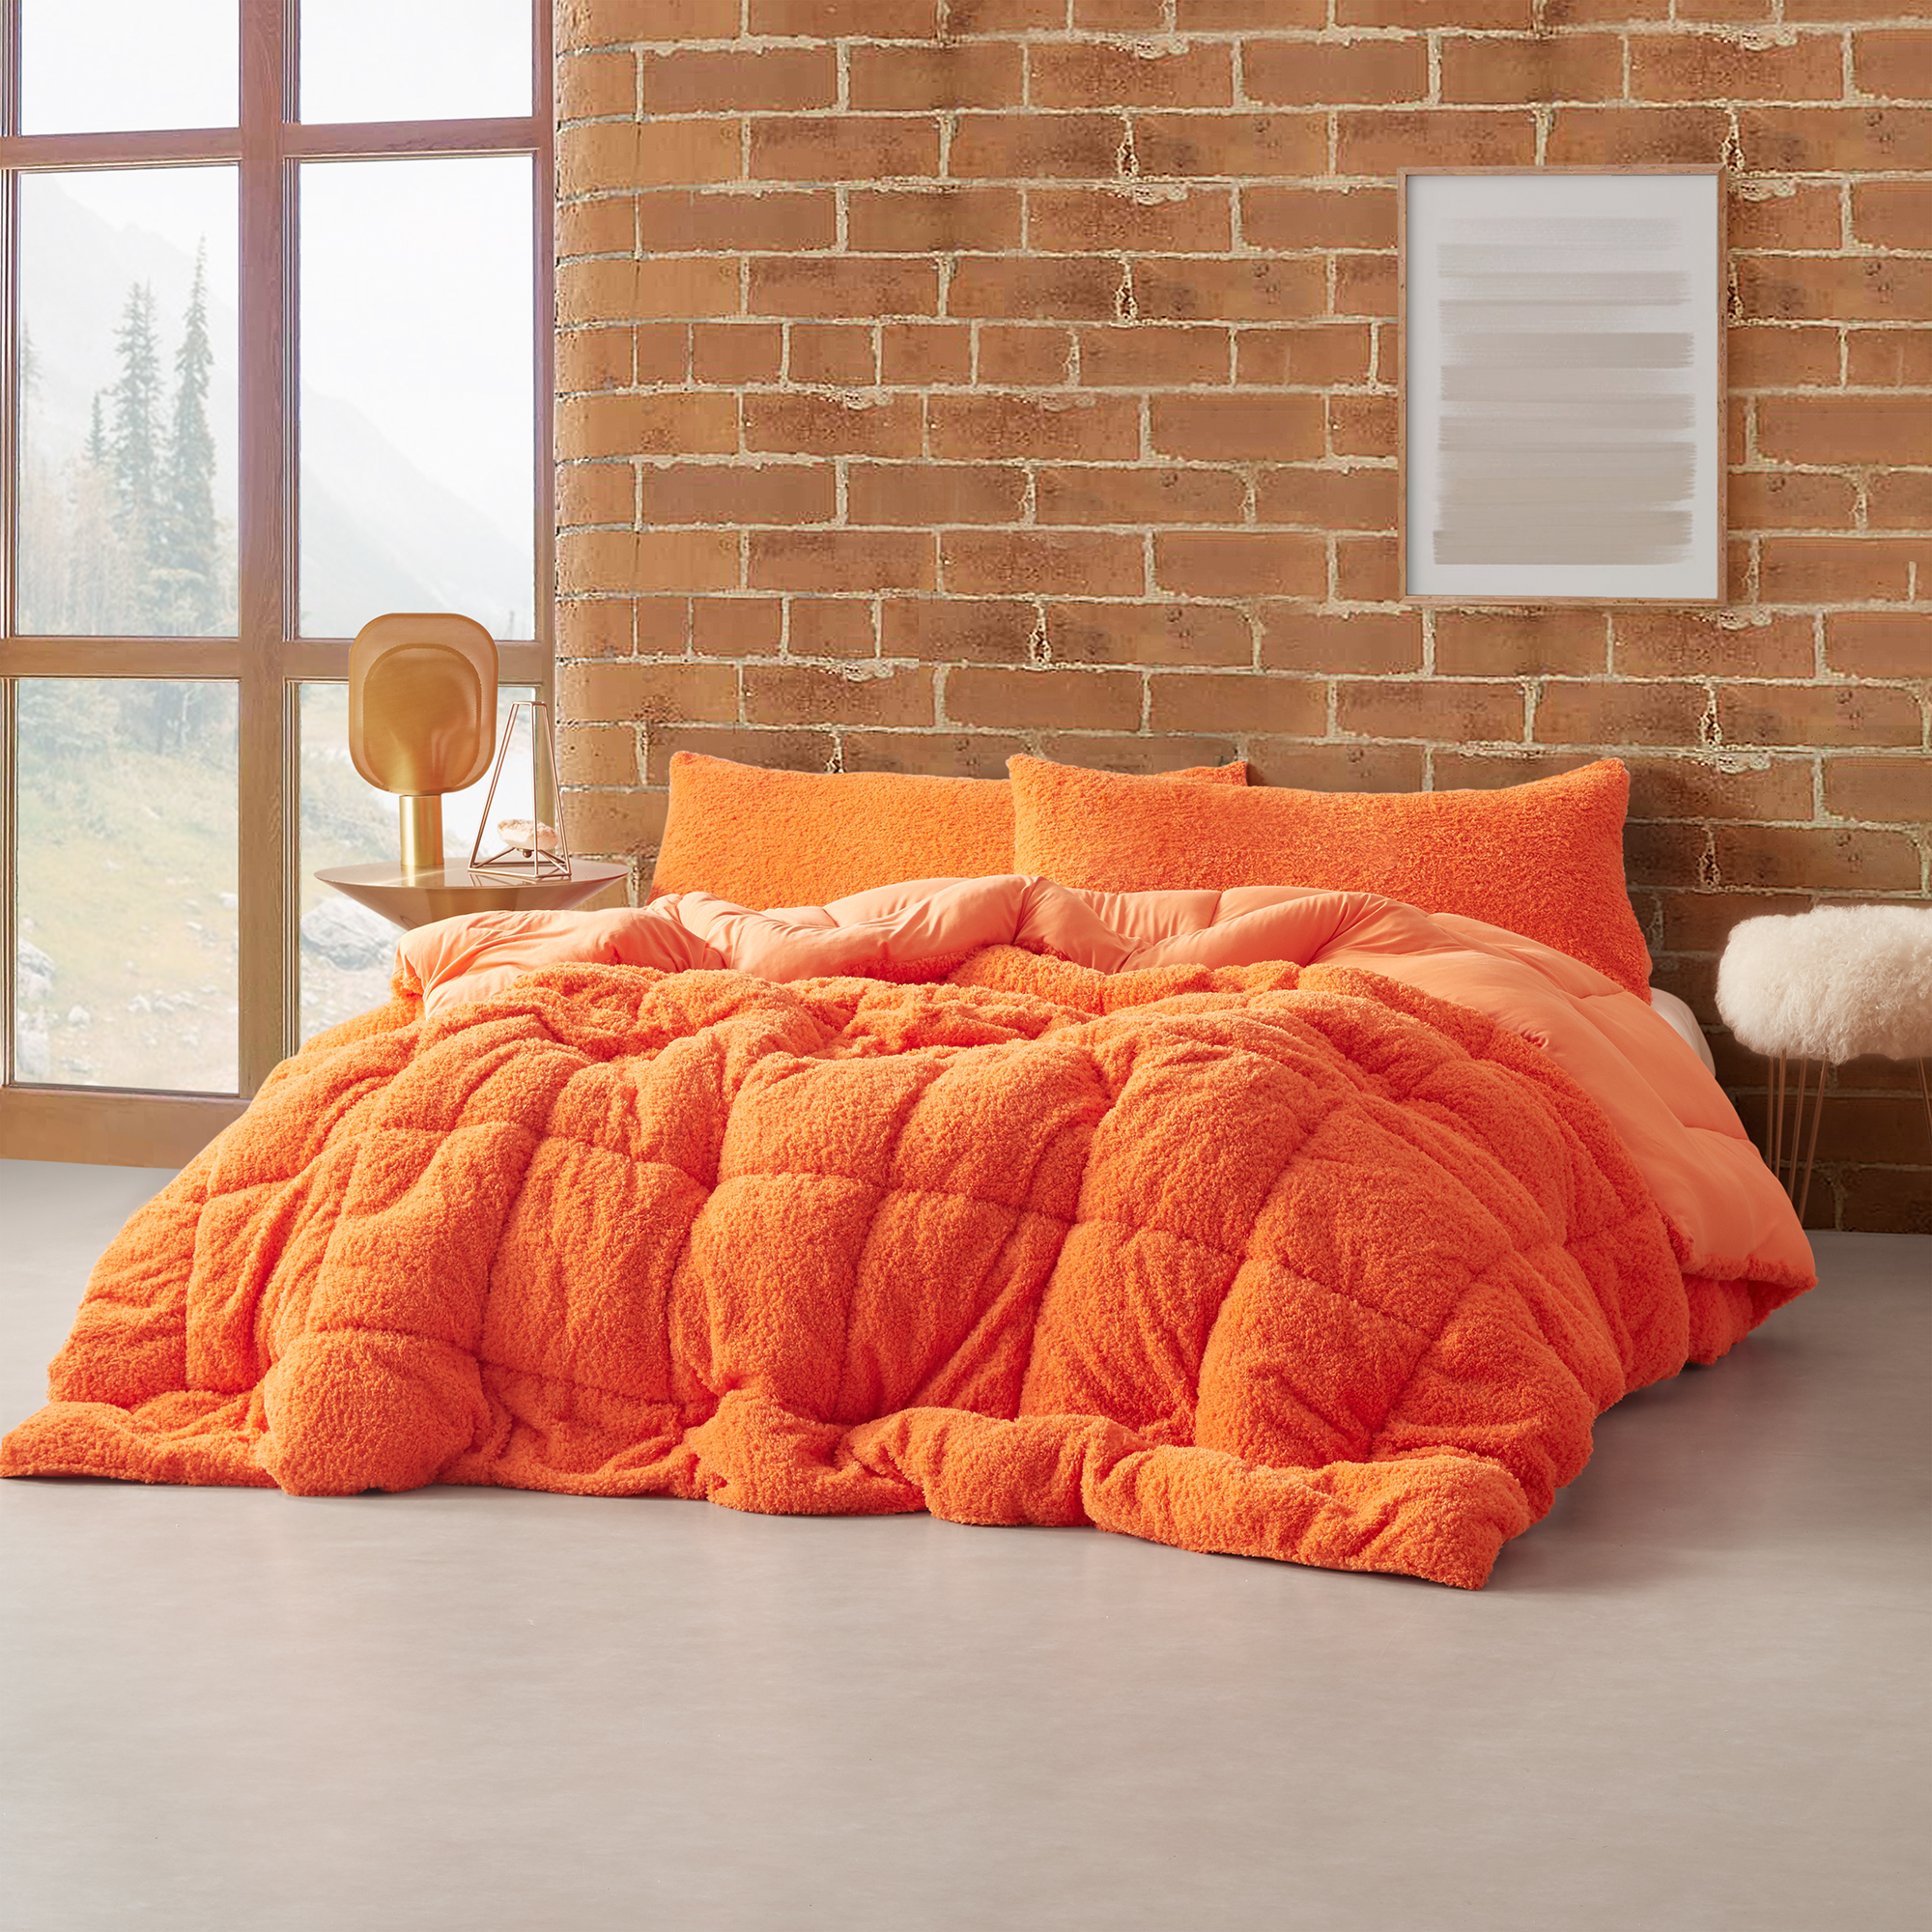 Dreamsicle Creamsicle - Coma Inducer® Full Comforter - Orange Peel